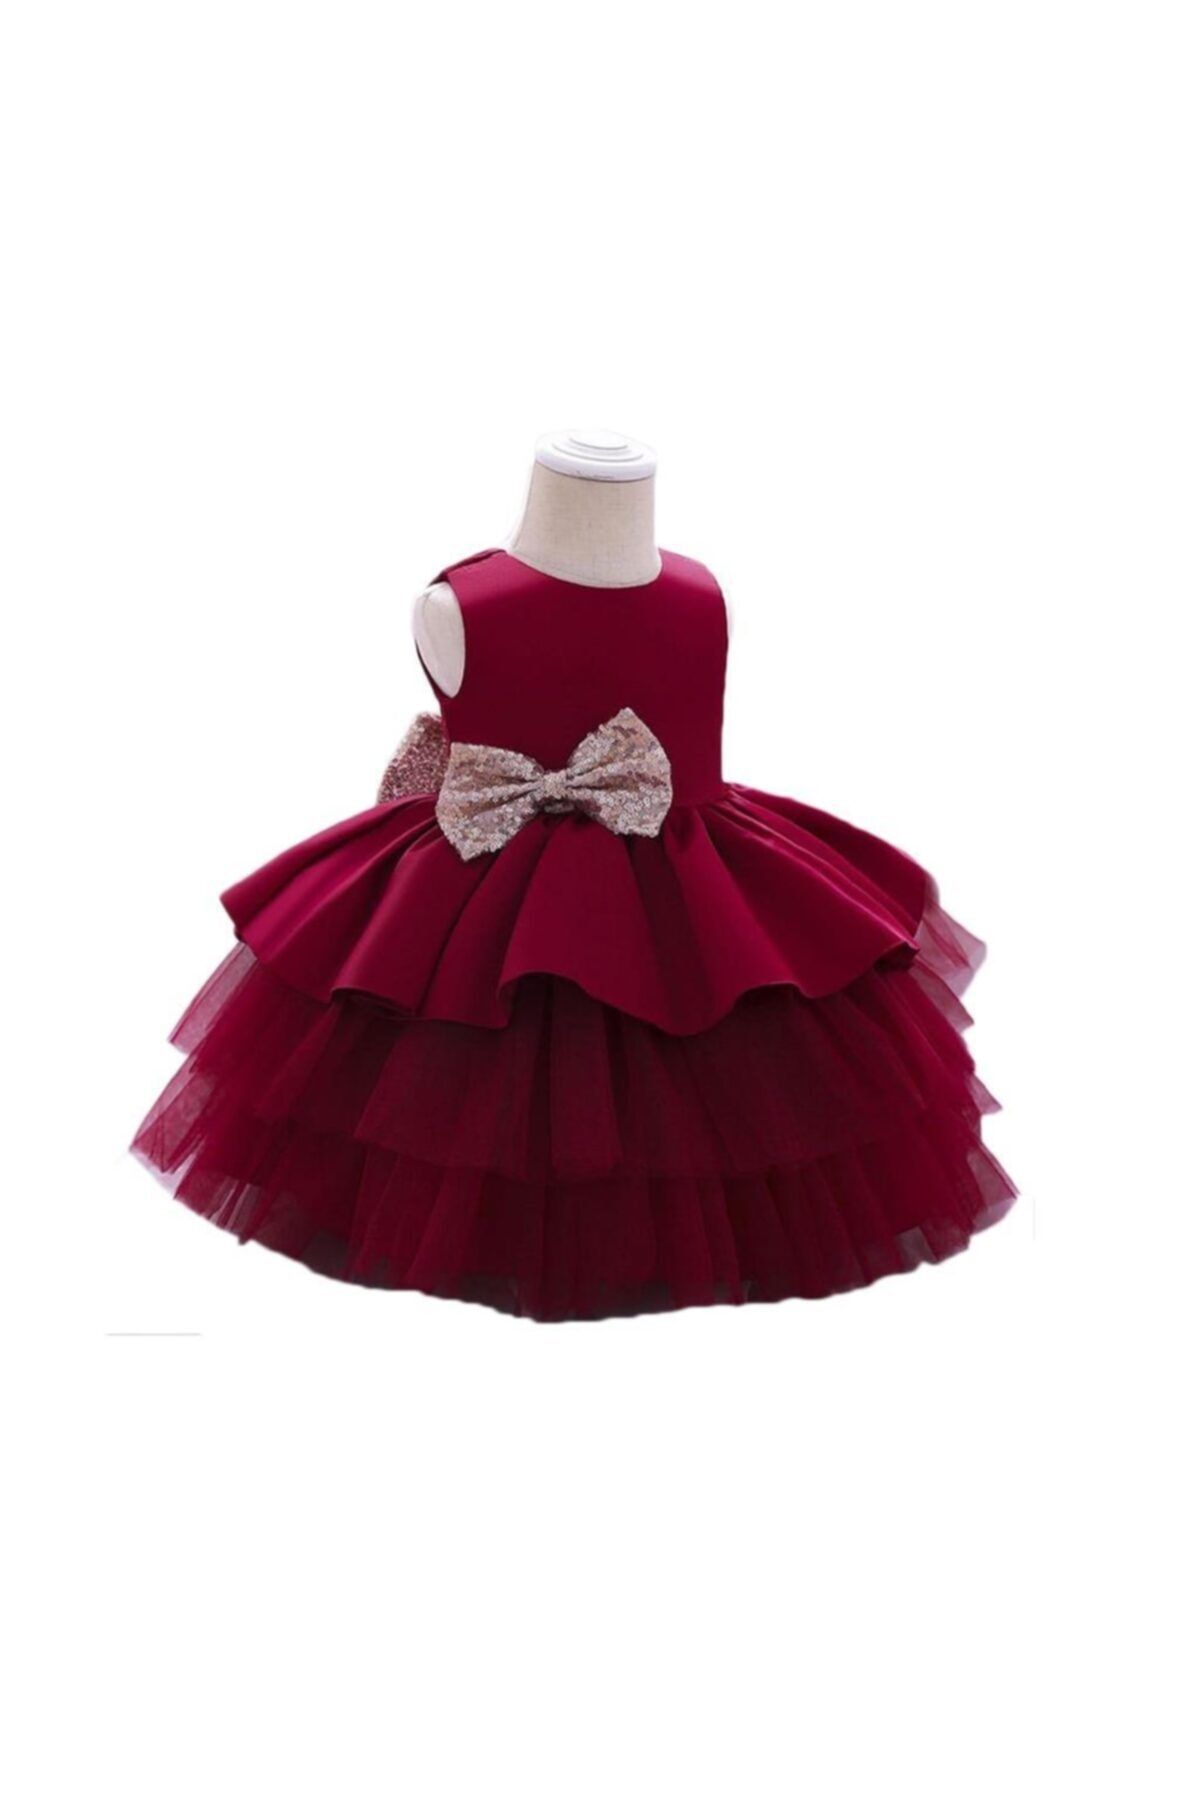 Mashotrend Kırmızı Kat Kat Tüllü Kurdelalı Elbise - Kat Kat Tül Elbise - Mini Elbise - Çocuk Elbisesi